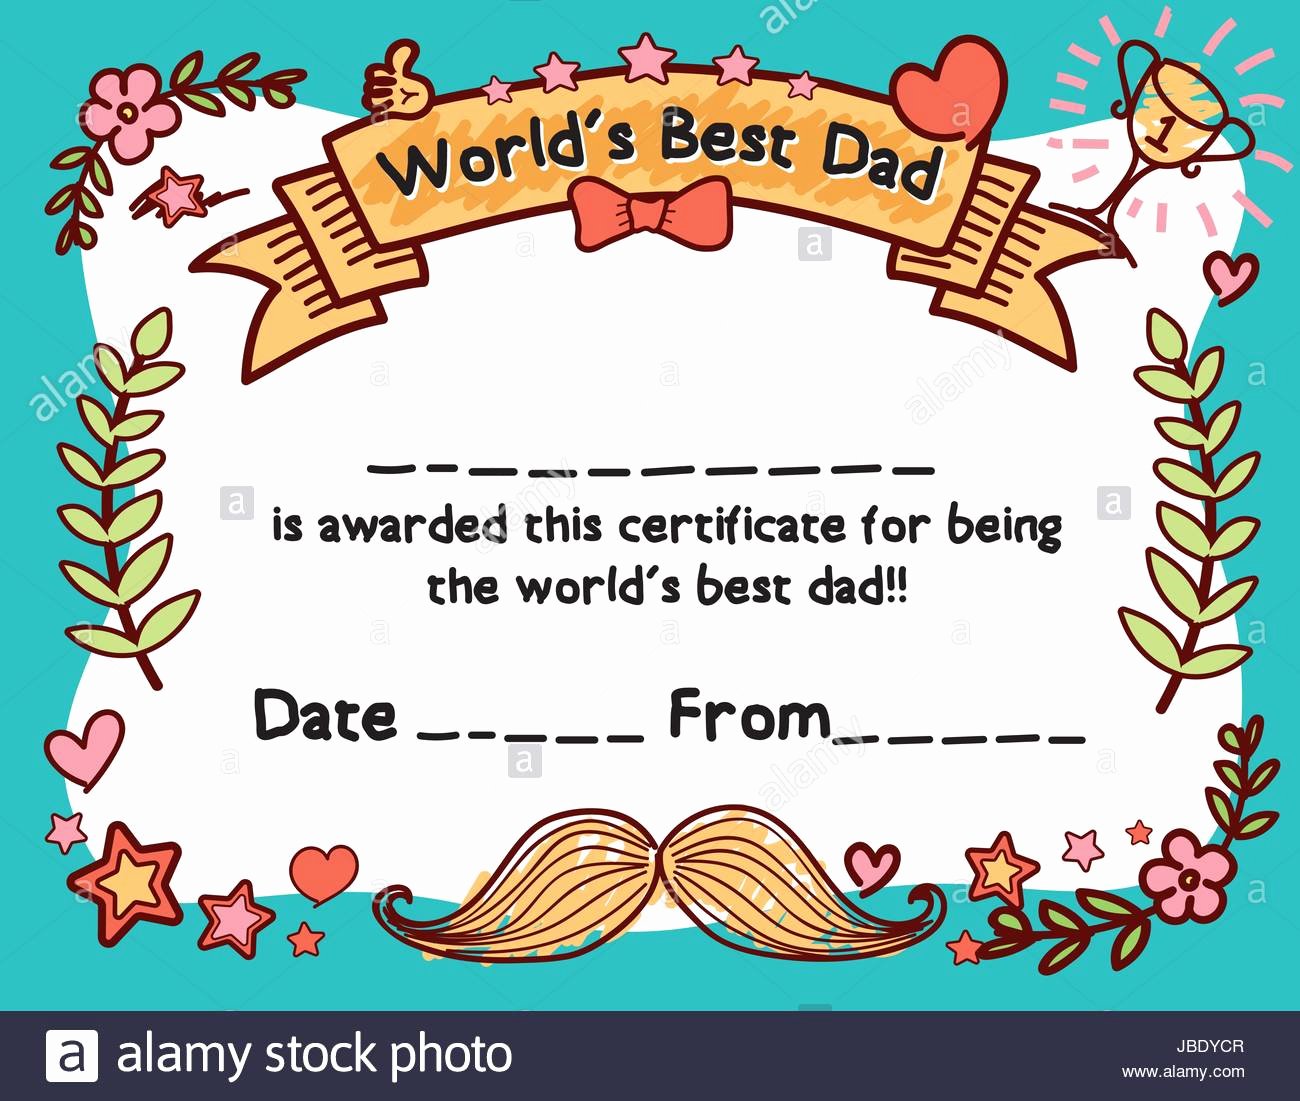 Best Dad Certificate Template Unique World S Best Dad Award Certificate Template for Father S